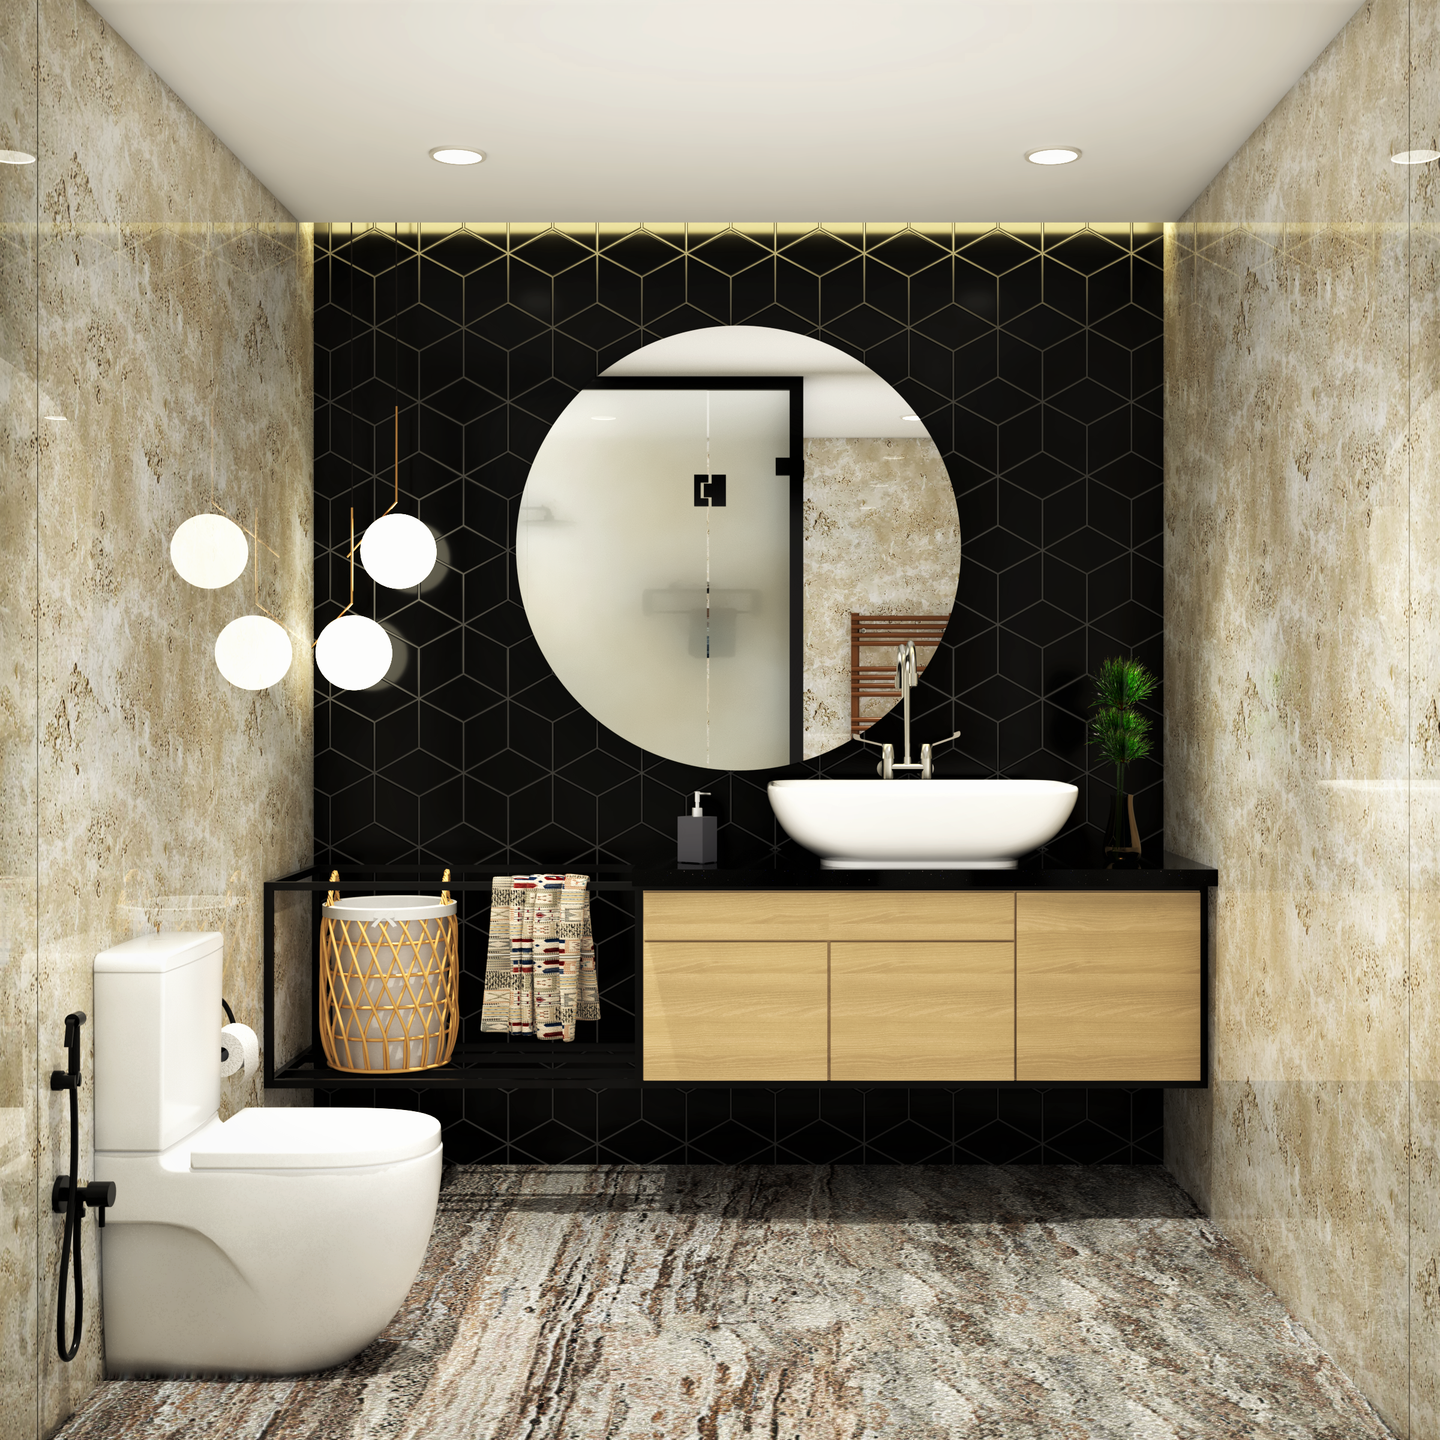 Bathroom Design With Mirror - Livspace